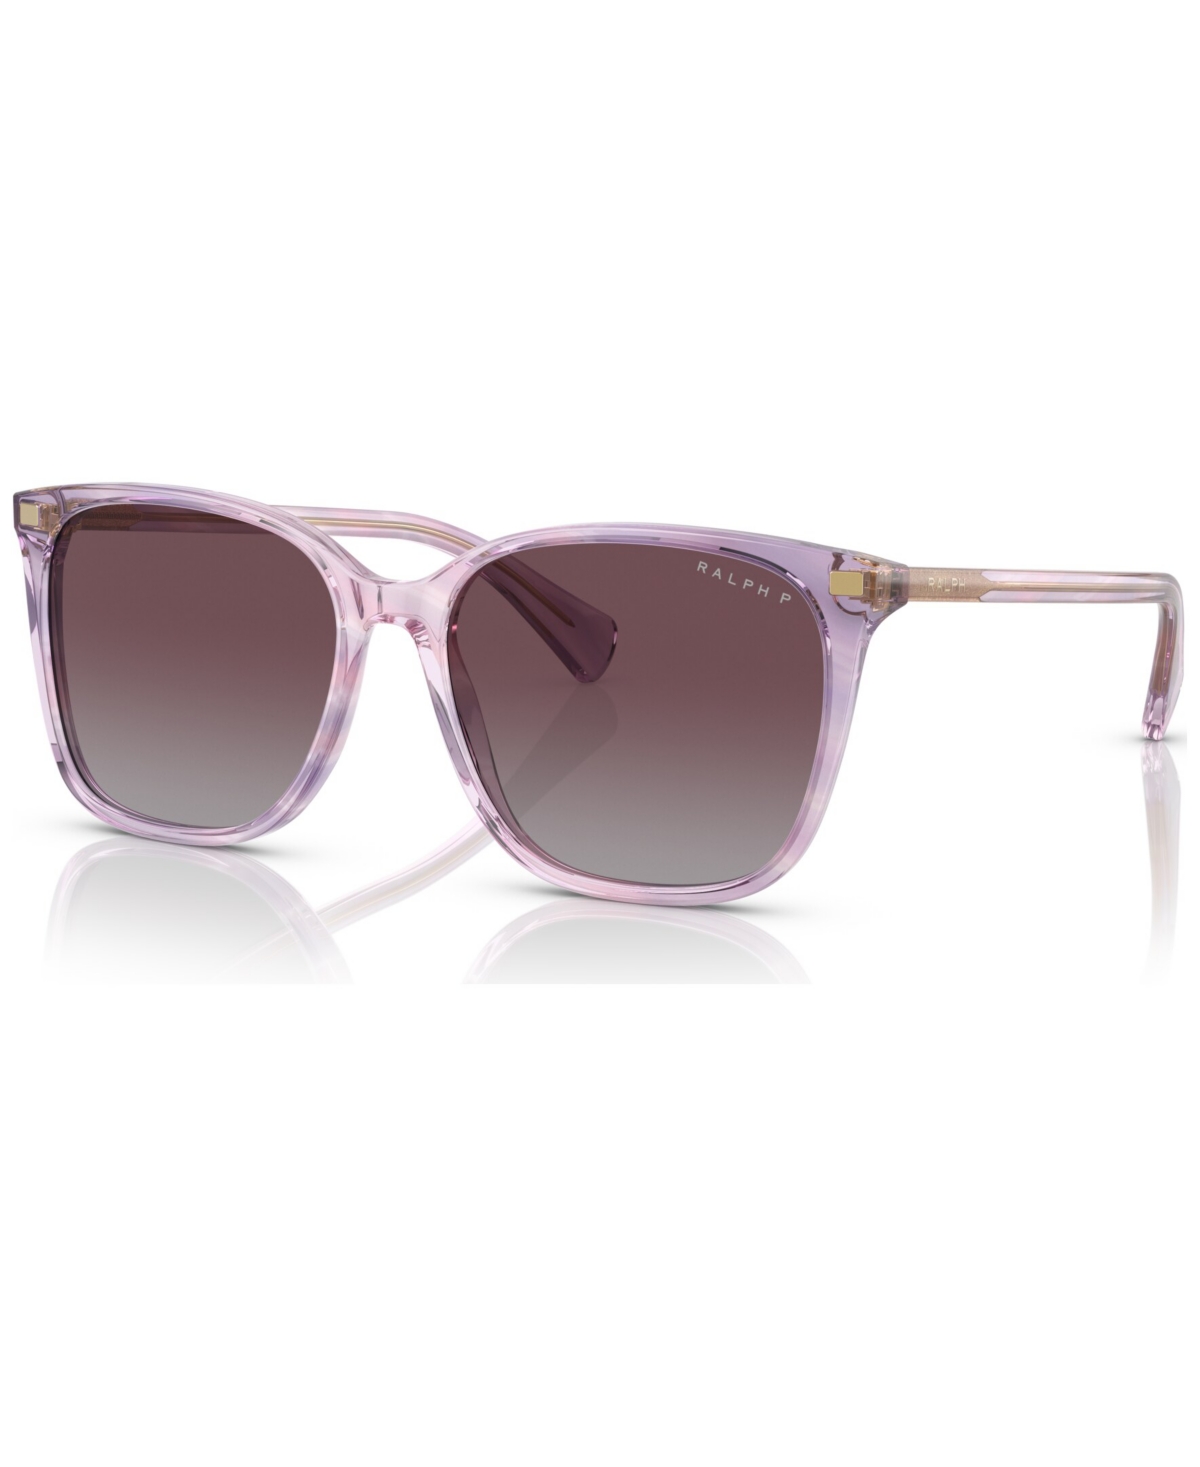 Women's Polarized Sunglasses, RA529356-p - Striped Purple